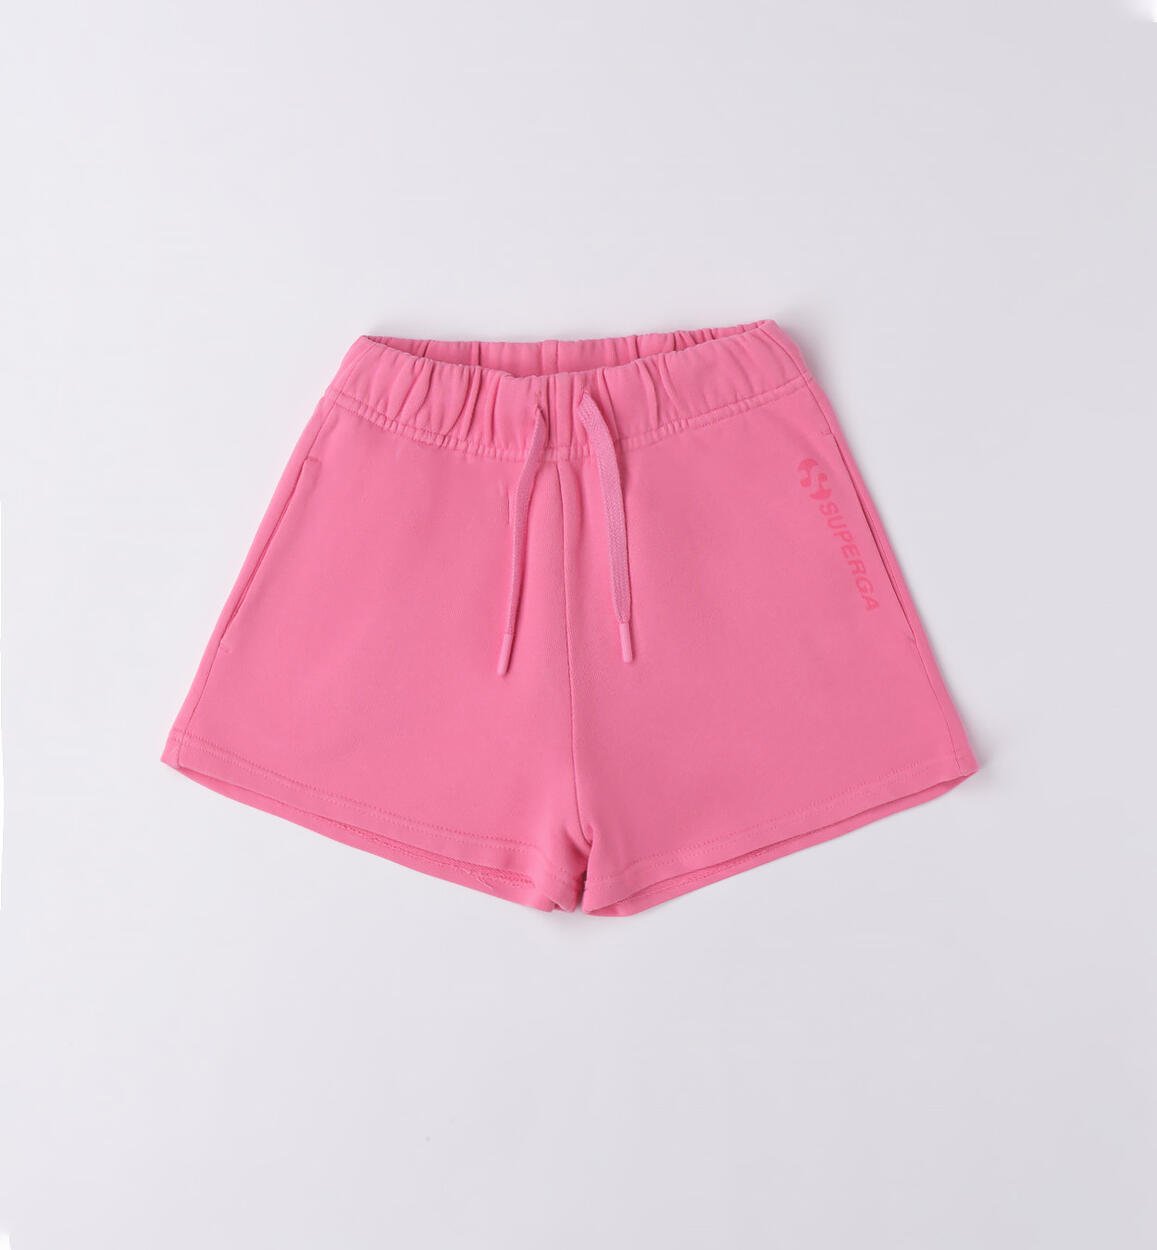 Pantalone corto 100% cotone bambina Superga ROSA SUPERGA